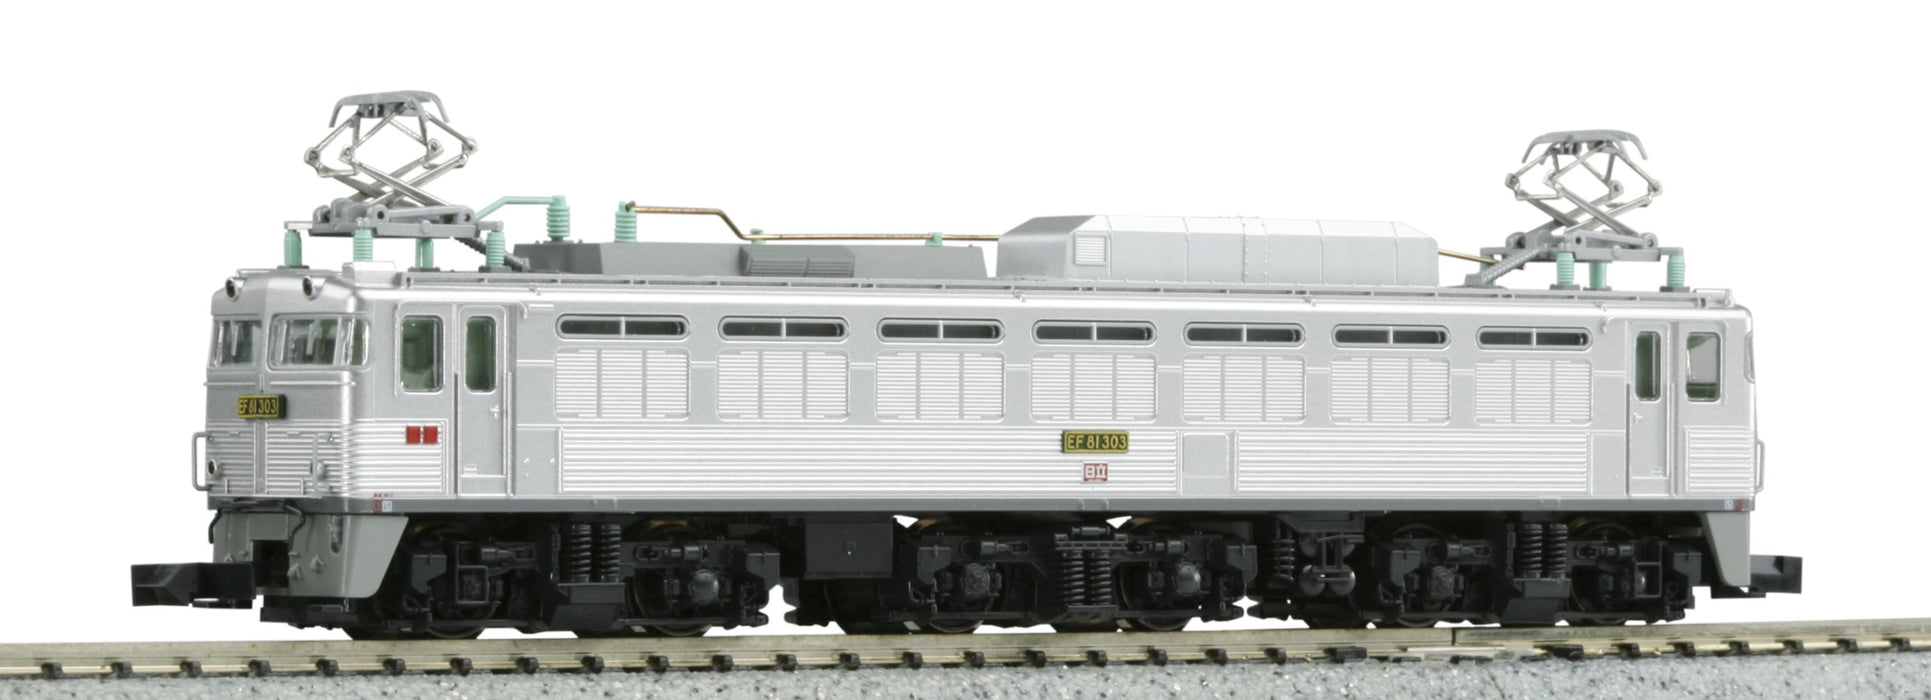 Kato N Gauge Ef81 300 3067-1 Model Railroad Electric Locomotive